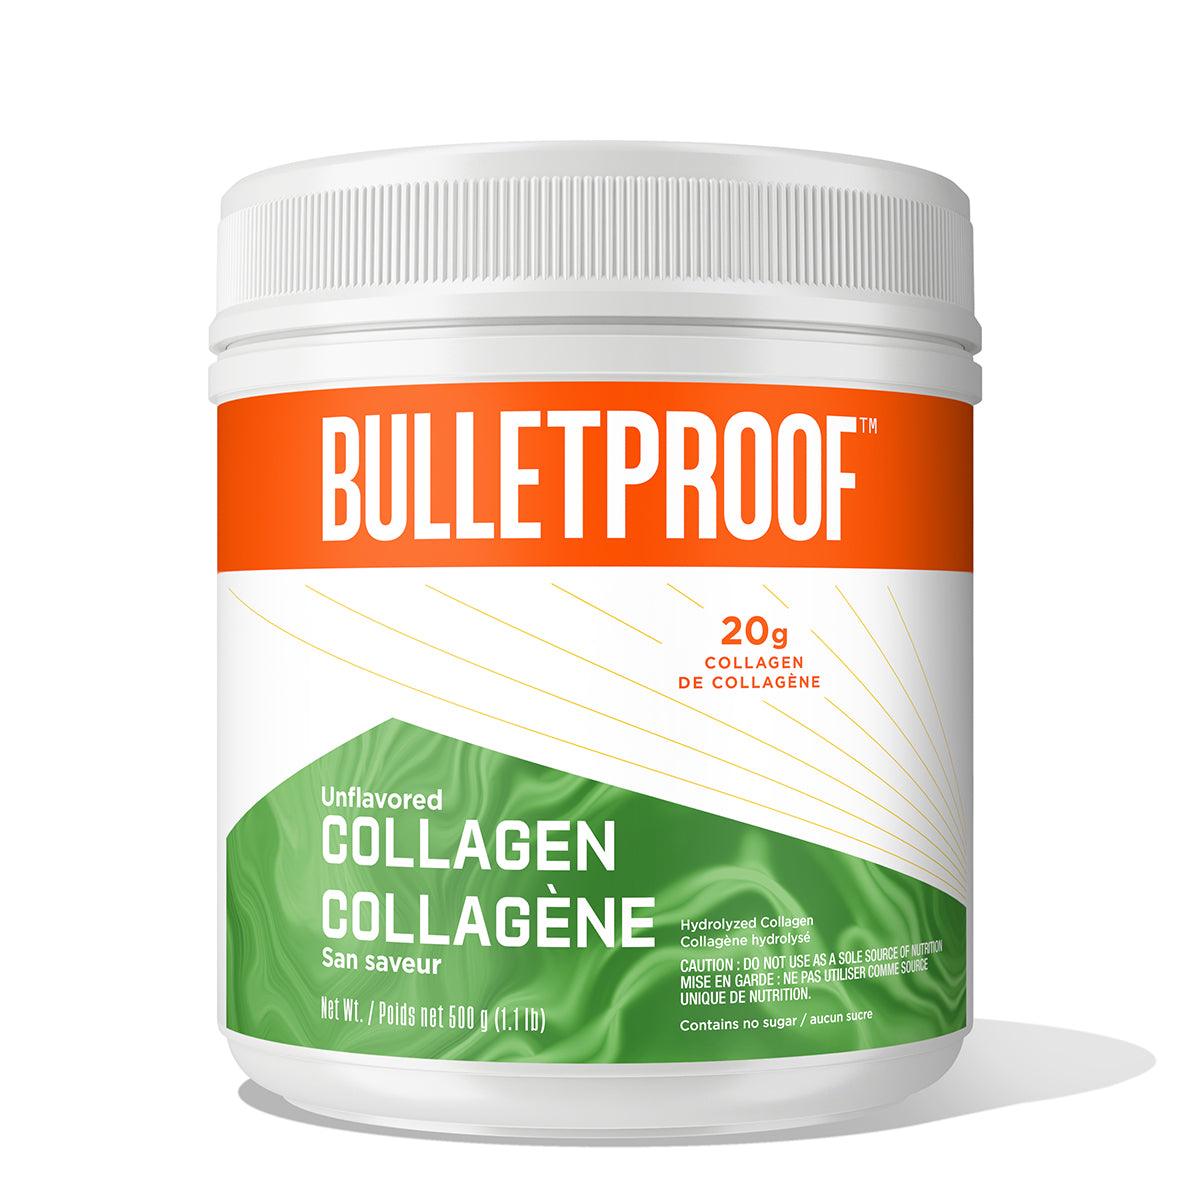 Bulletproof Products Online